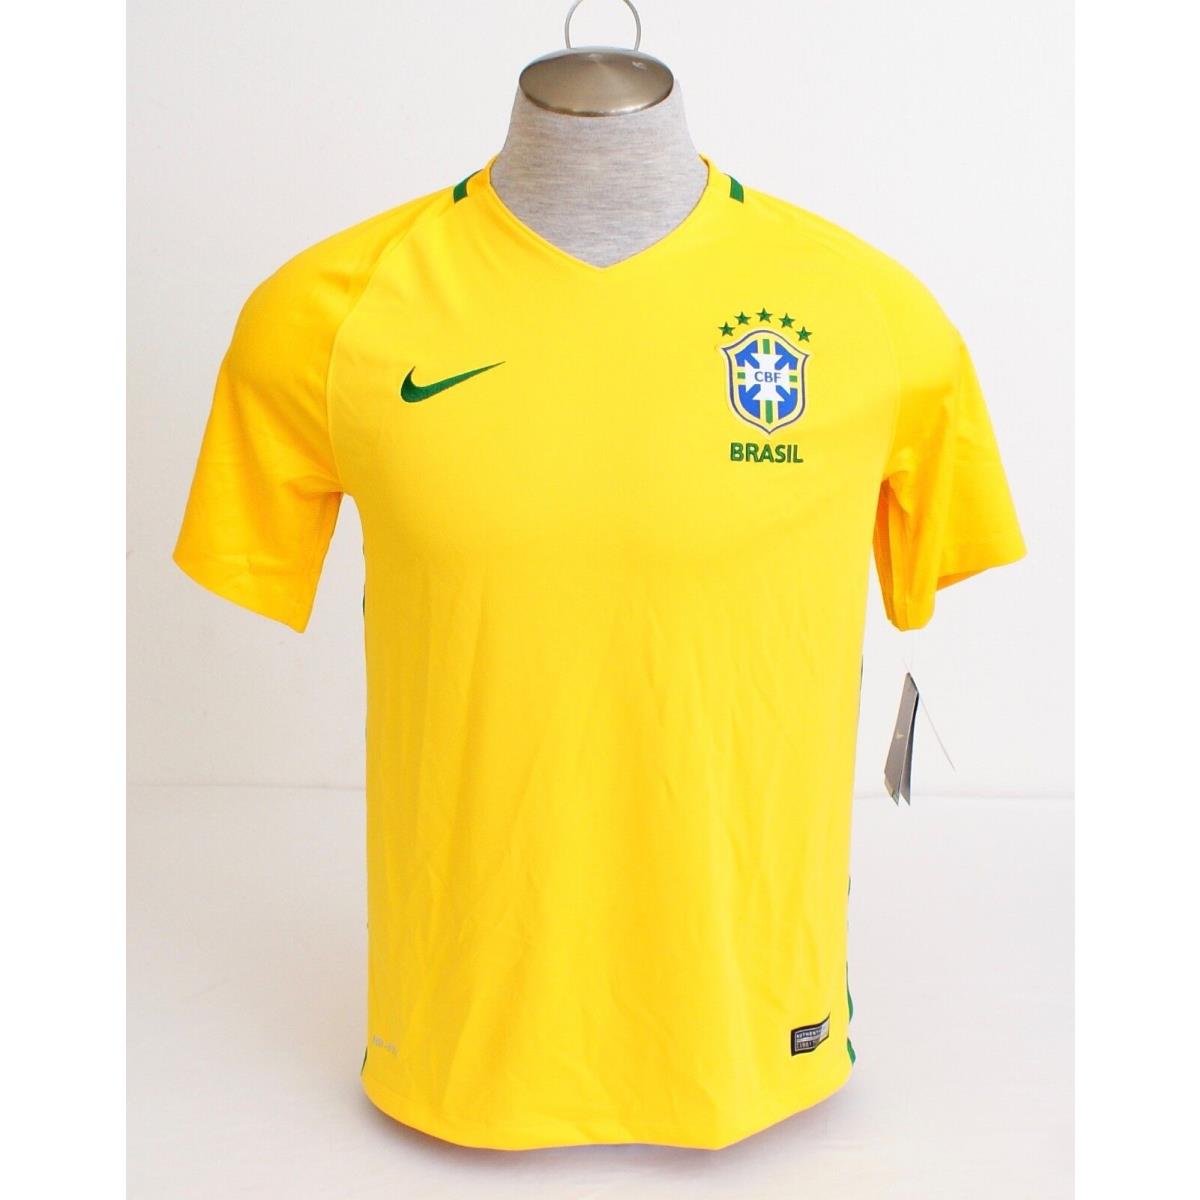 Nike Dri Fit Cbf Brazil National Football Team Yellow Short Sleeve Jersey Men`s